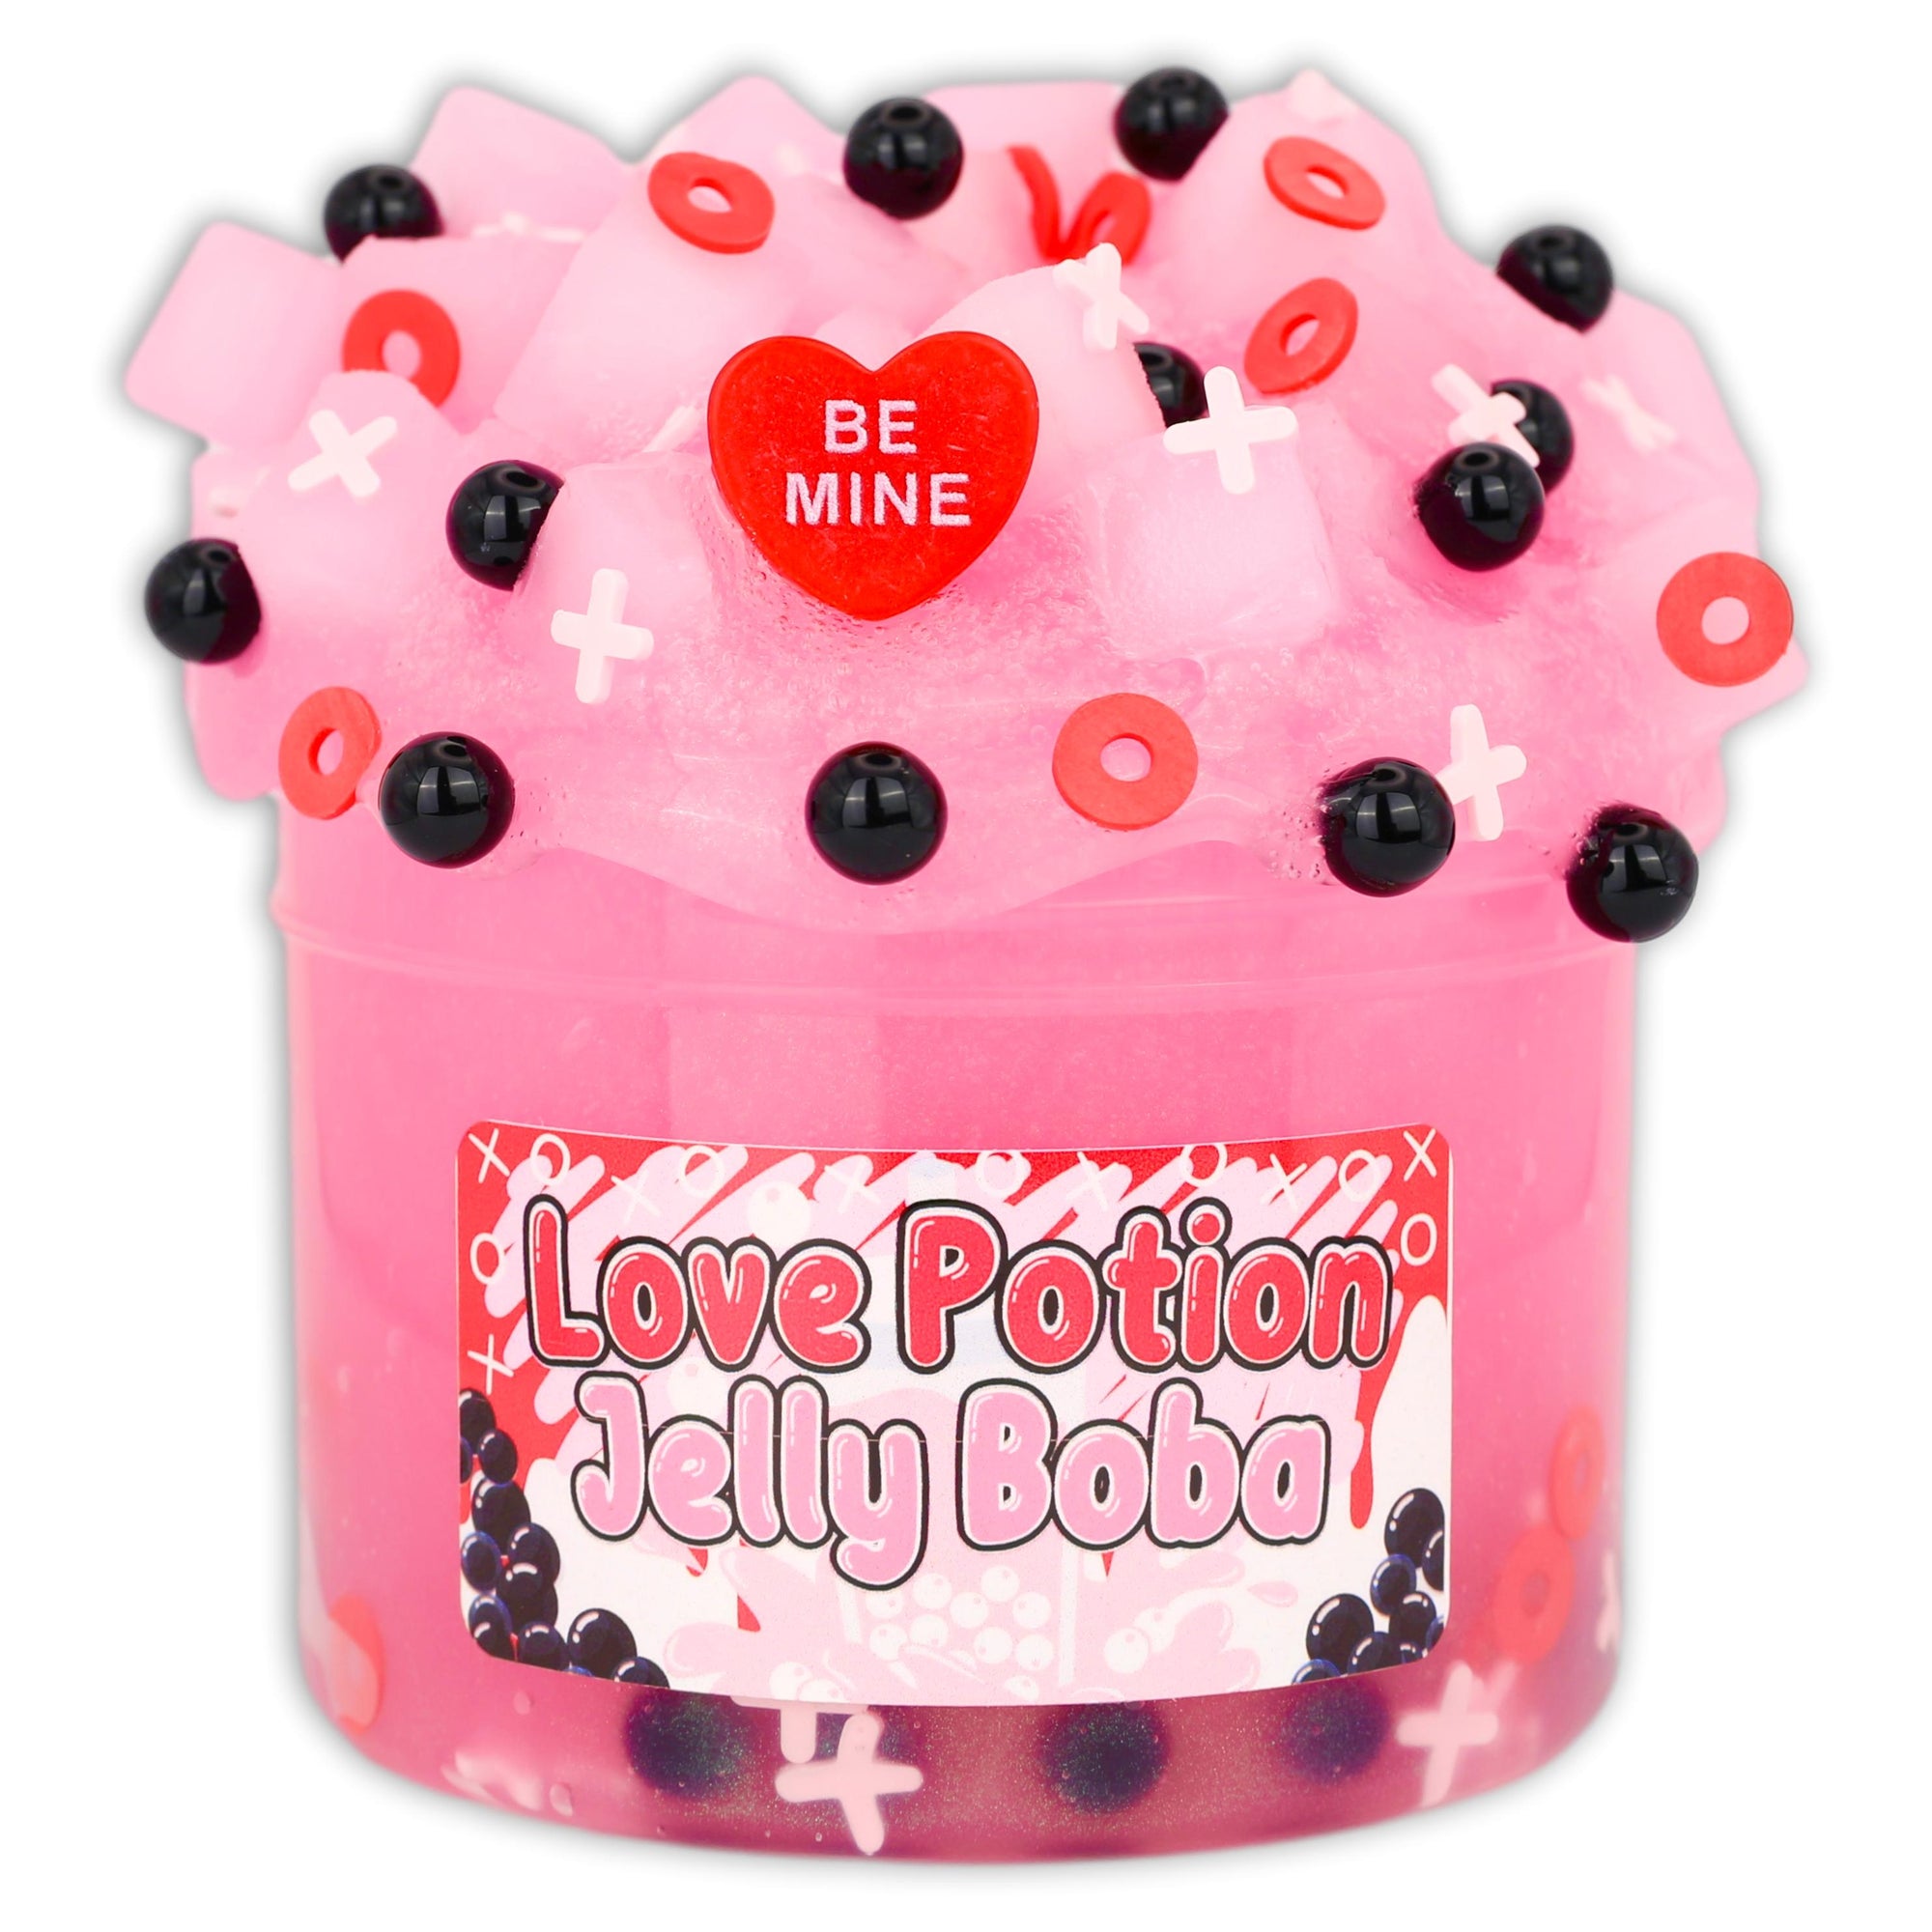 Love Potion Jelly Boba Jelly Cube Slime - Shop Valentines Slime 